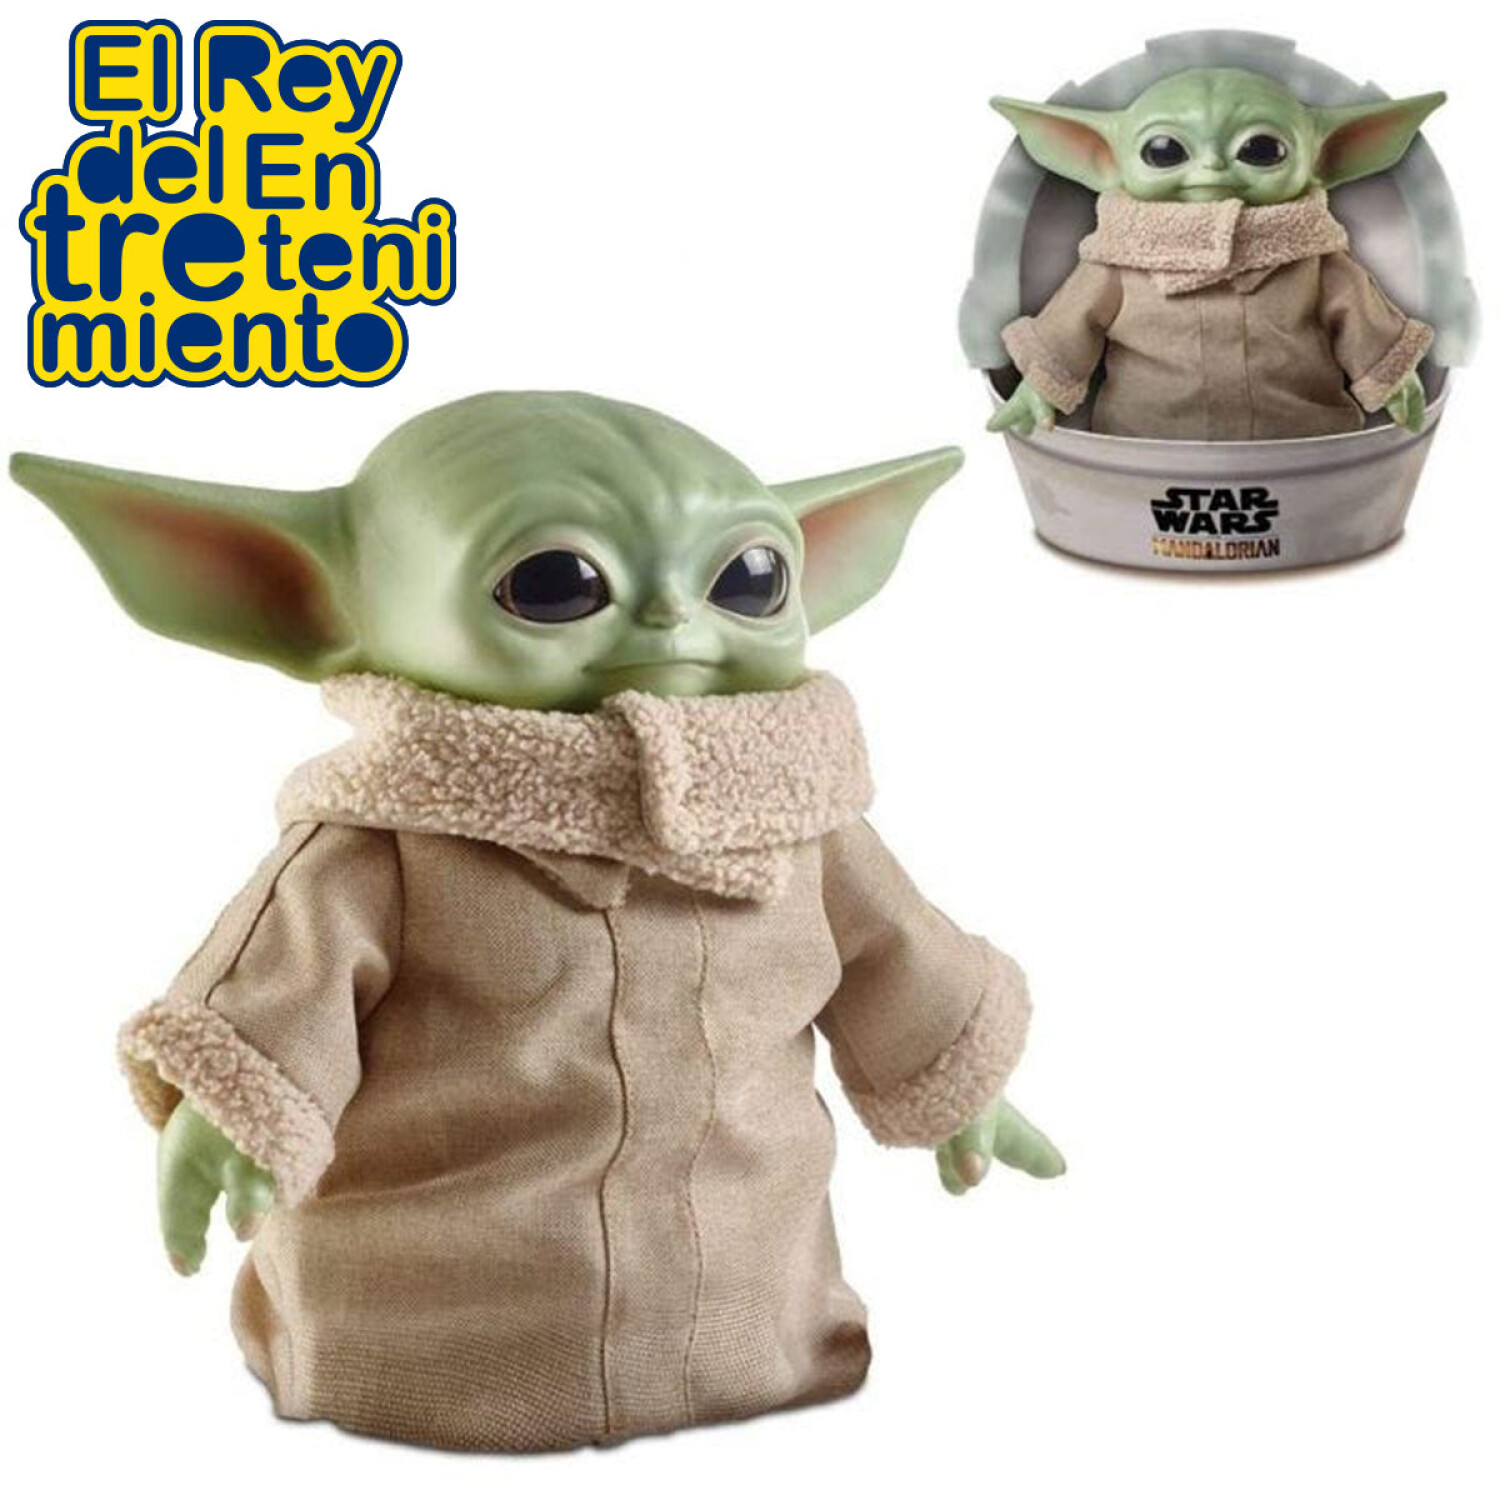 Star Wars - Baby Yoda The Child - Peluche 28 cm, Mandalorian